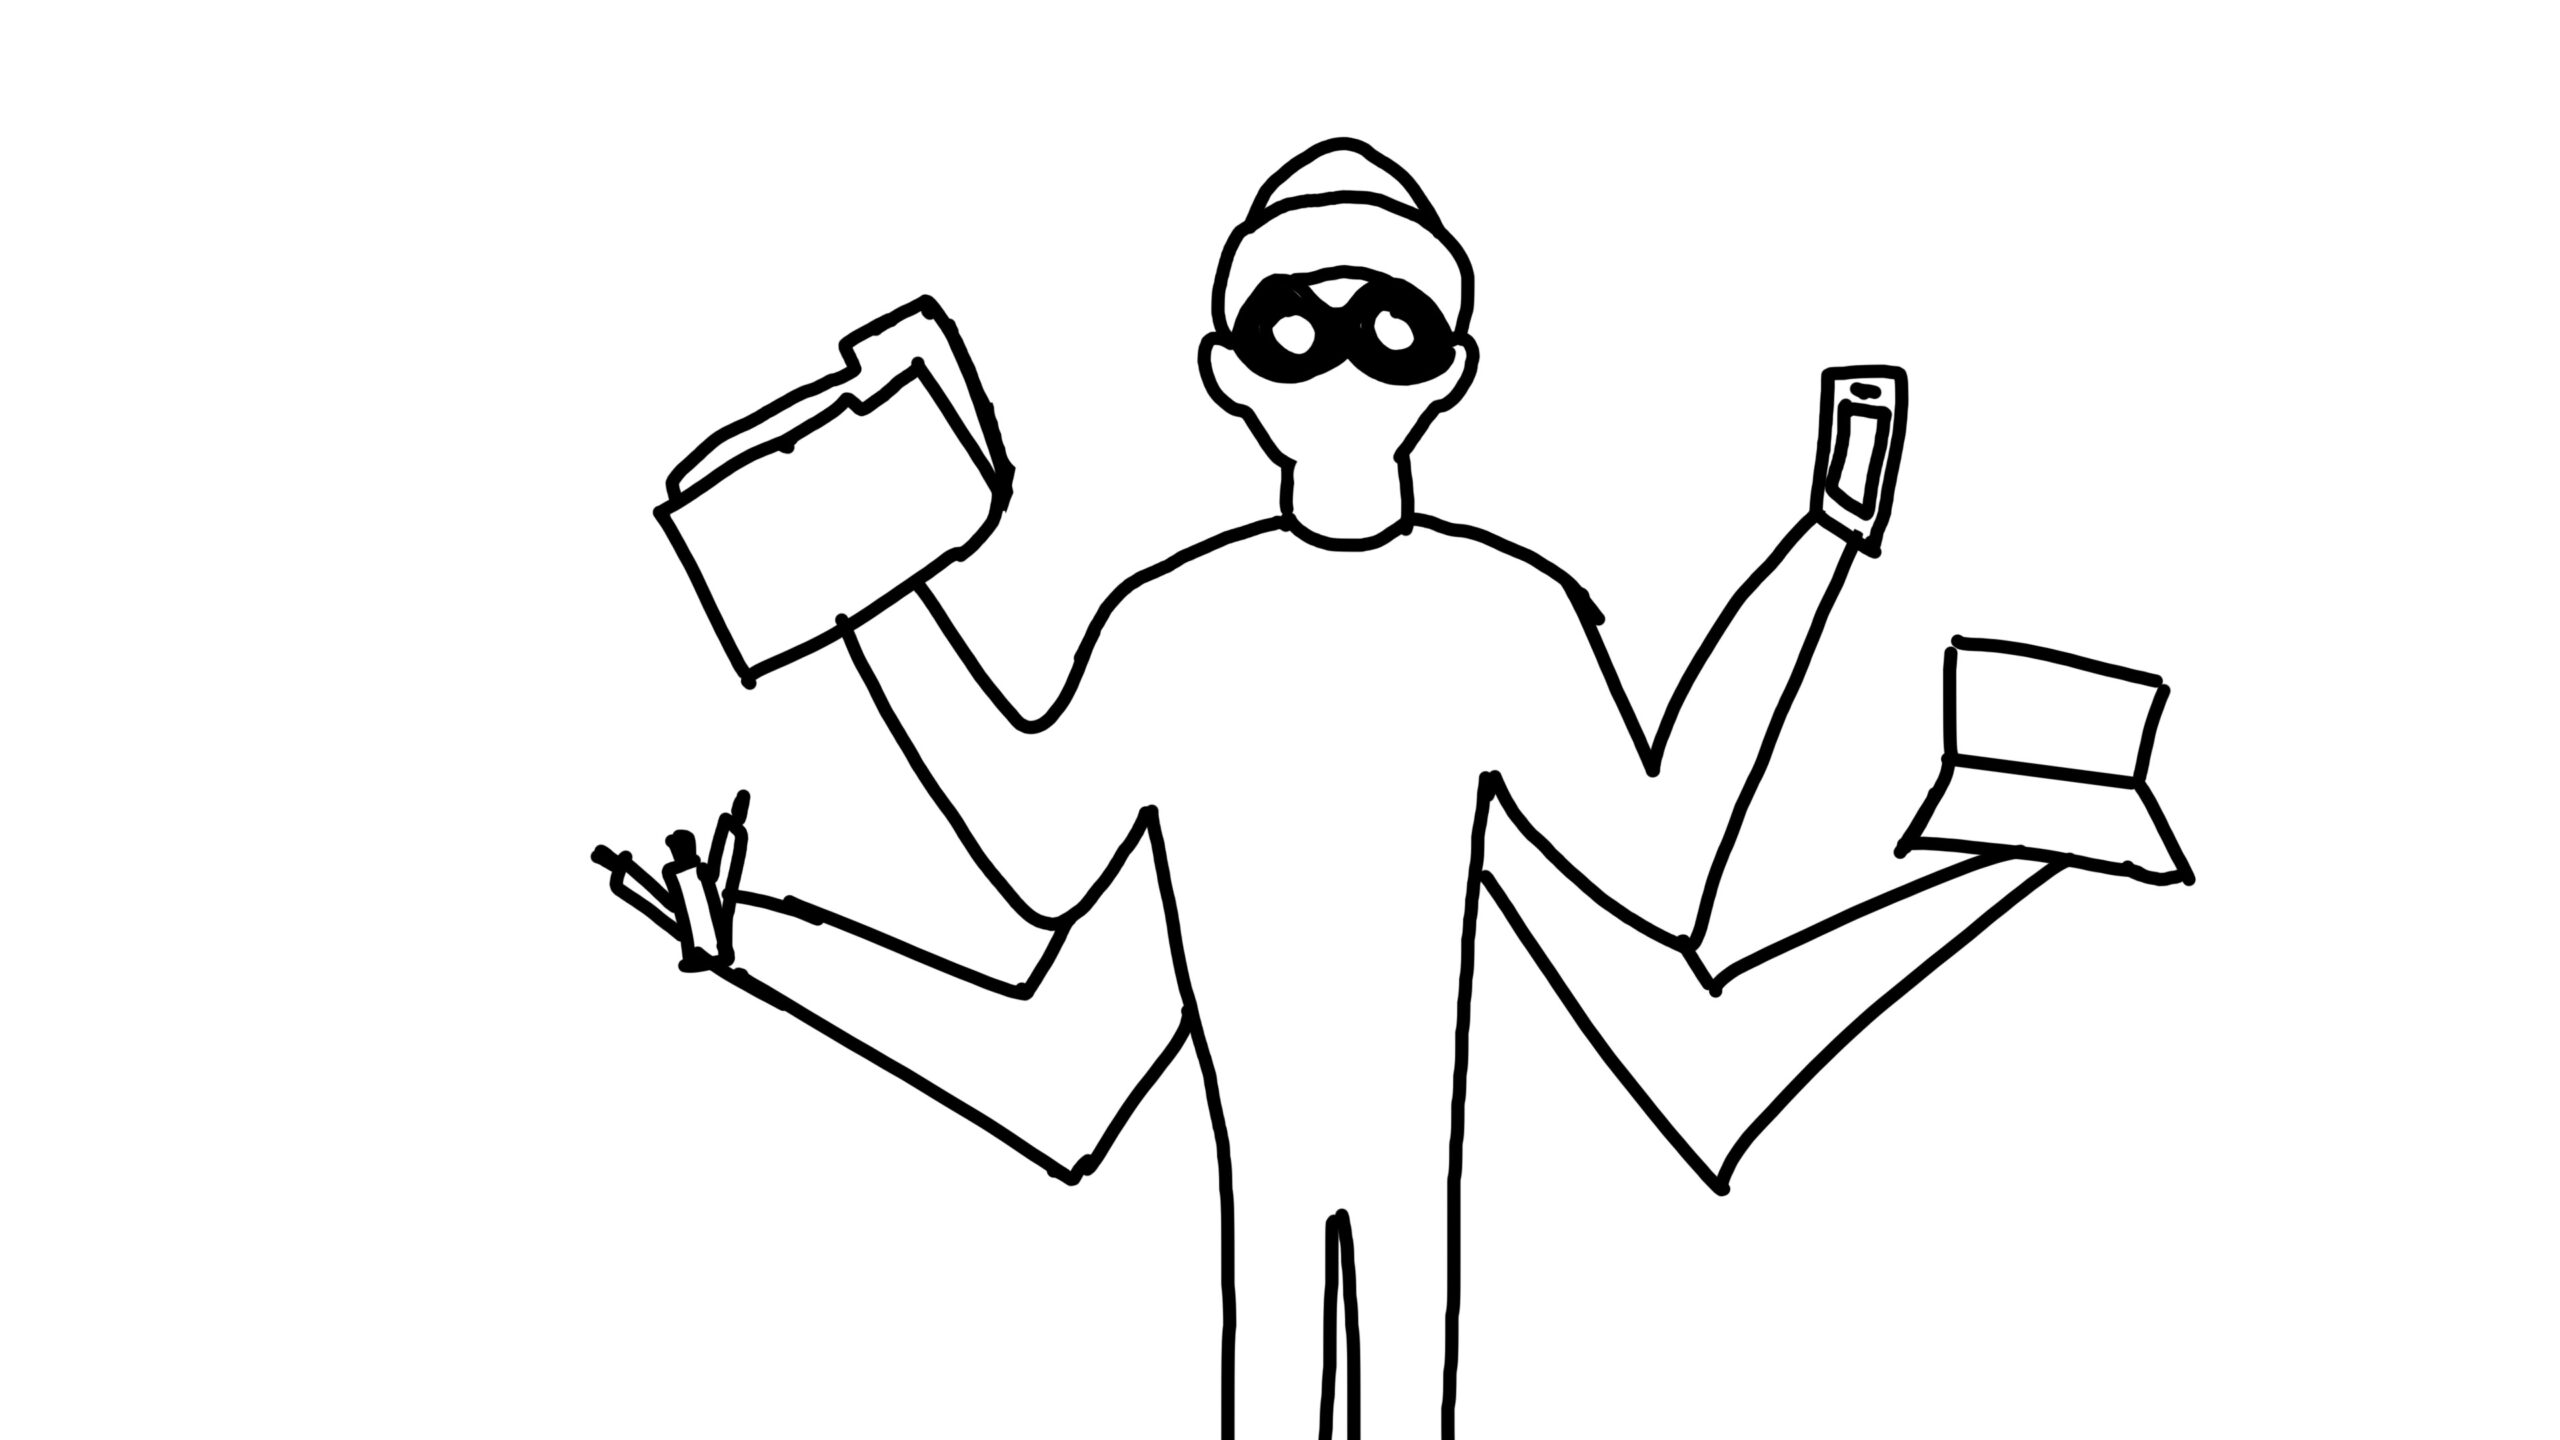 Privacy_Incident_Sketchboard_0308